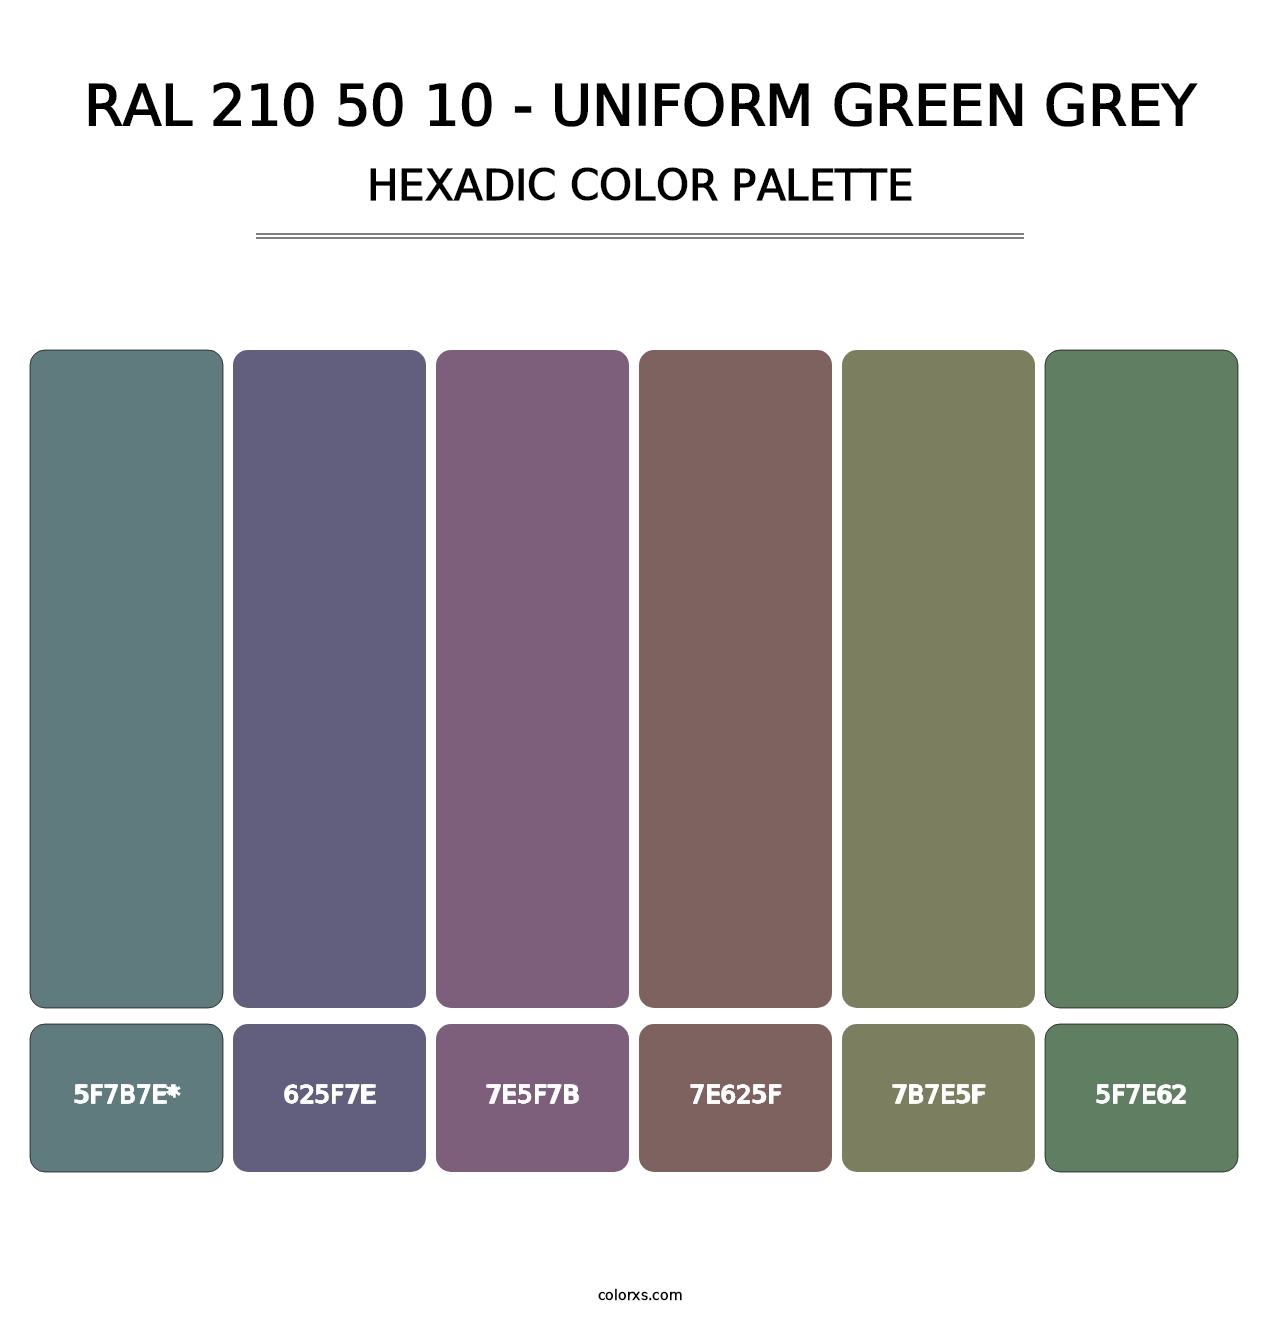 RAL 210 50 10 - Uniform Green Grey - Hexadic Color Palette